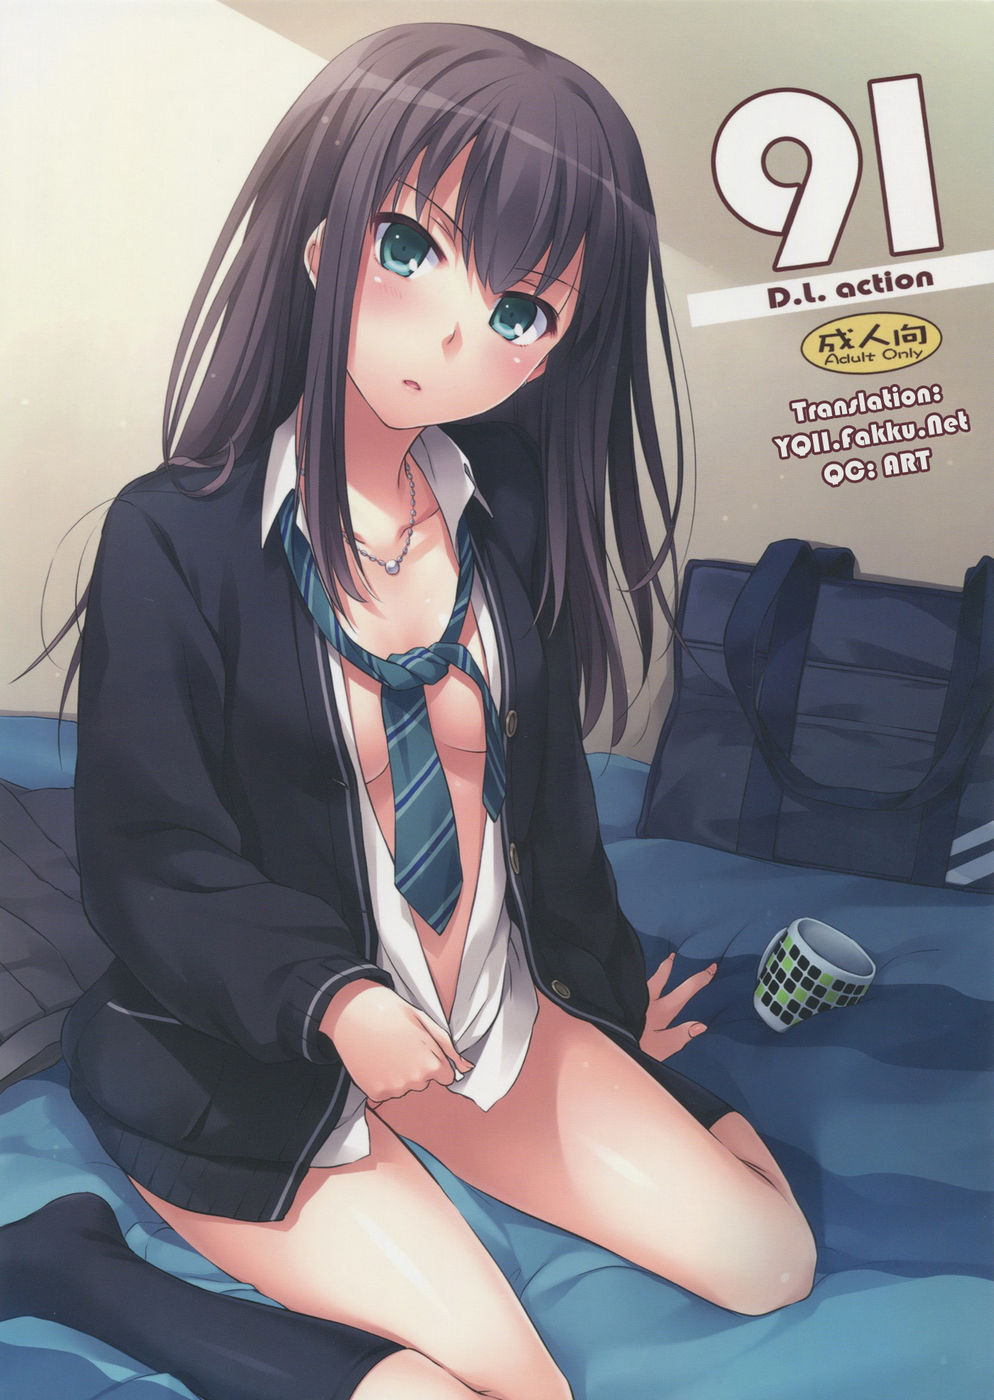 Hentai Manga Comic-D.L. action 91-Read-1